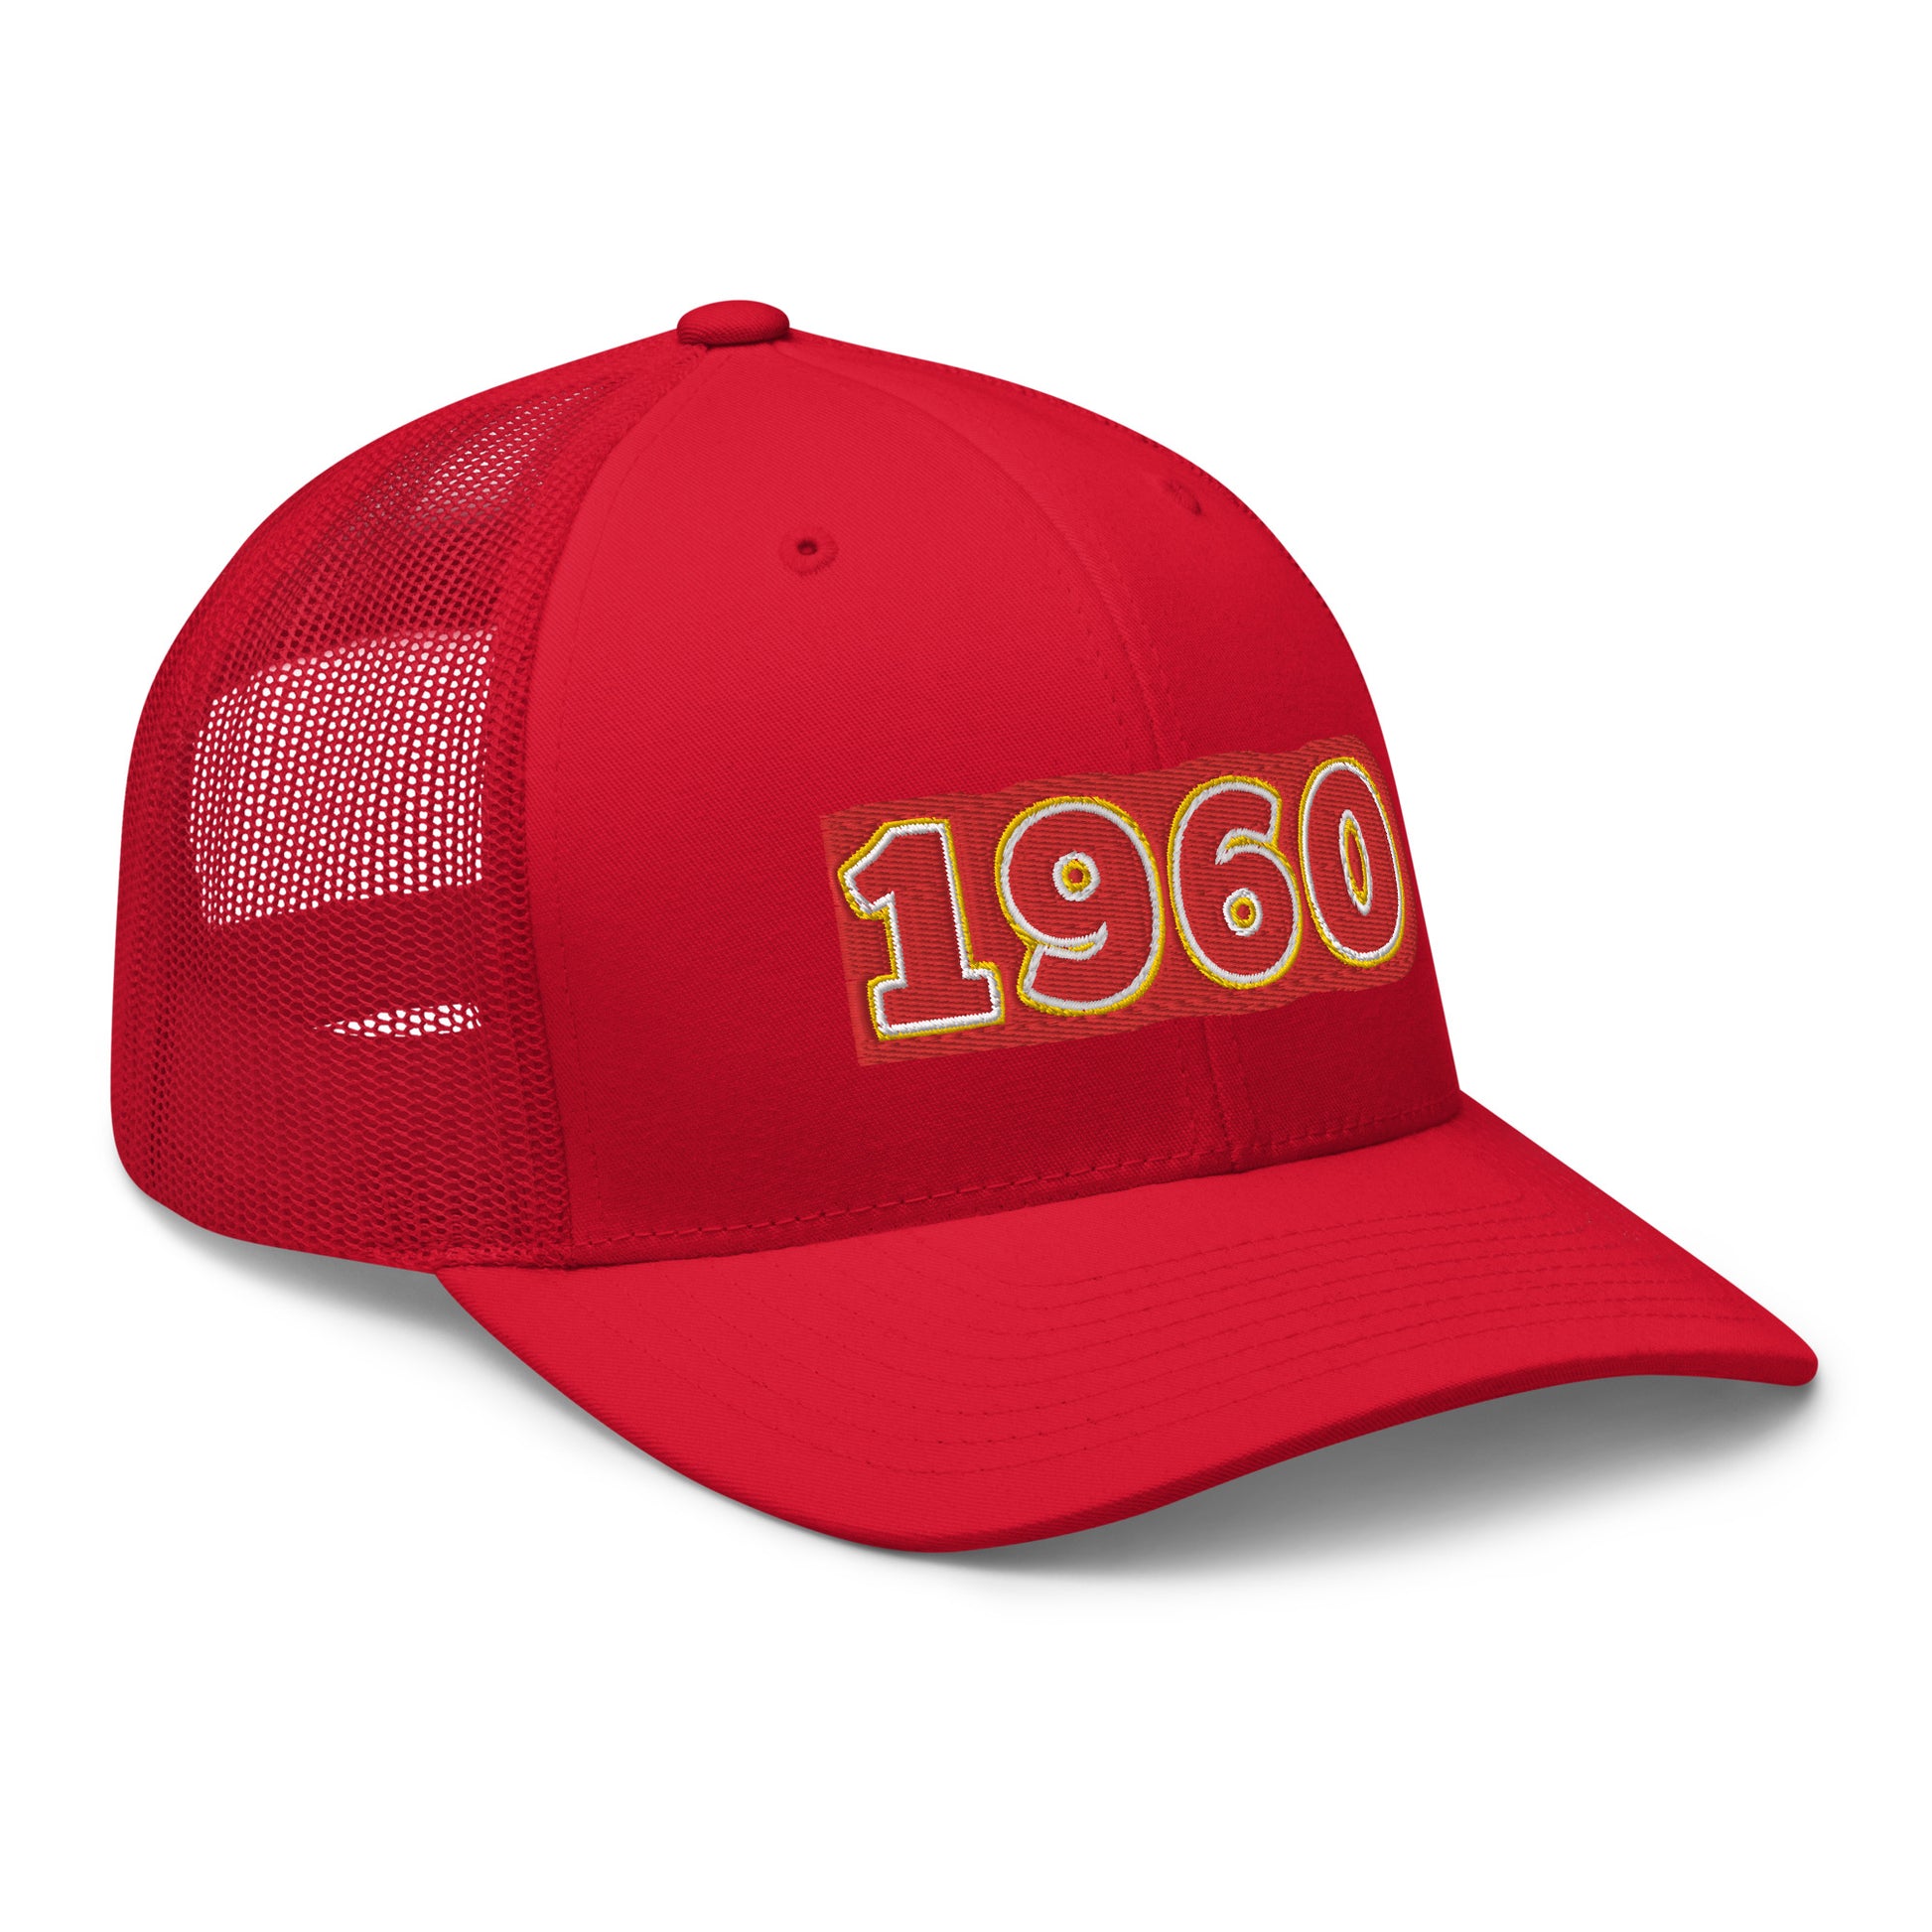 1960 Hat / Kansas City Hat / Chiefs Hat / Kansas City Chiefs Cap